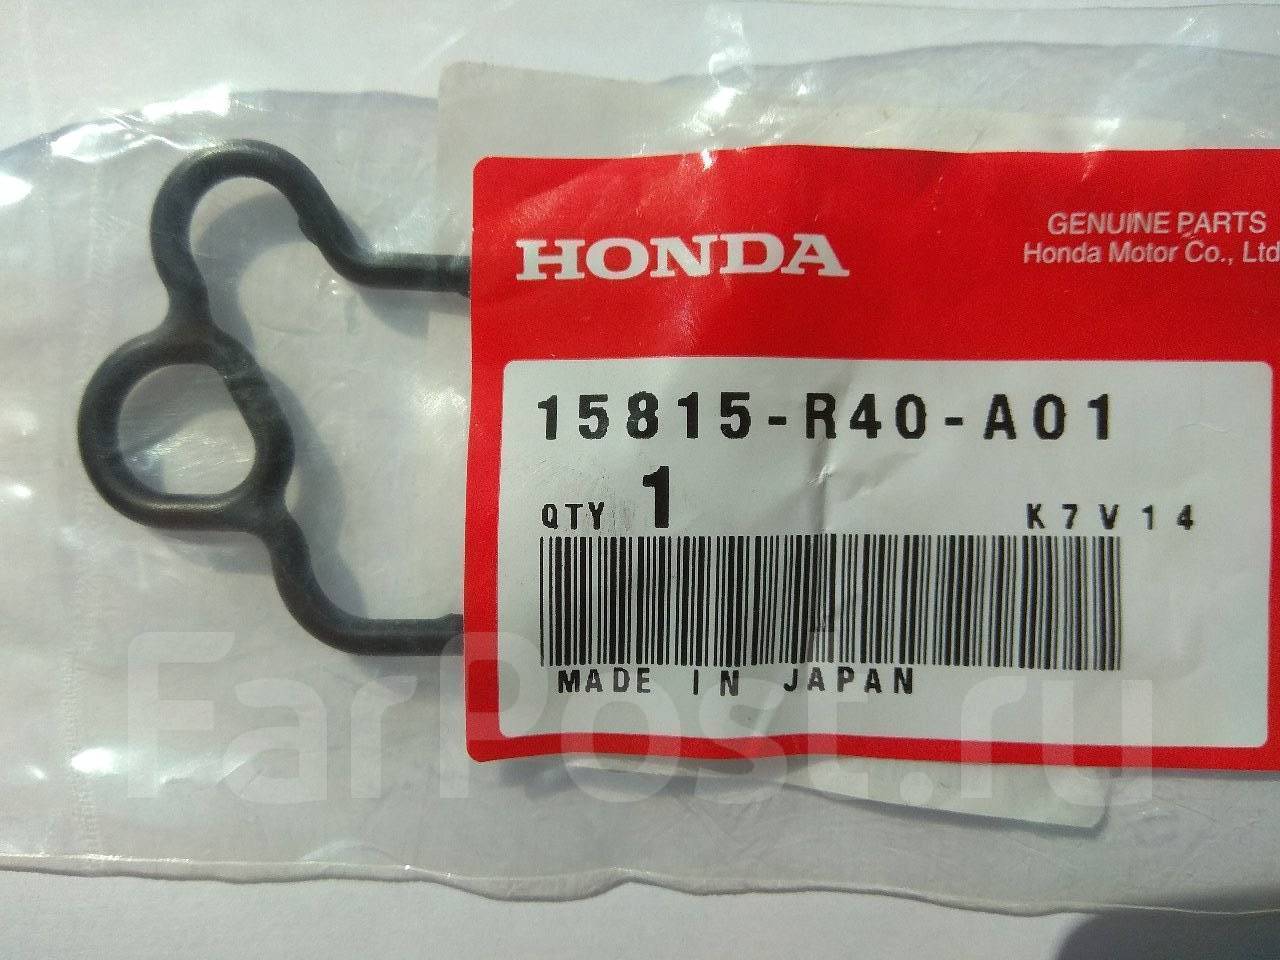 Honda v прокладки. Stp15815r40a01_sa1 stp15815r40a01_прокладка клапана VTEC ho. 15815r40a01. 15815r40a01 Honda. Прокладка VTEC Honda.